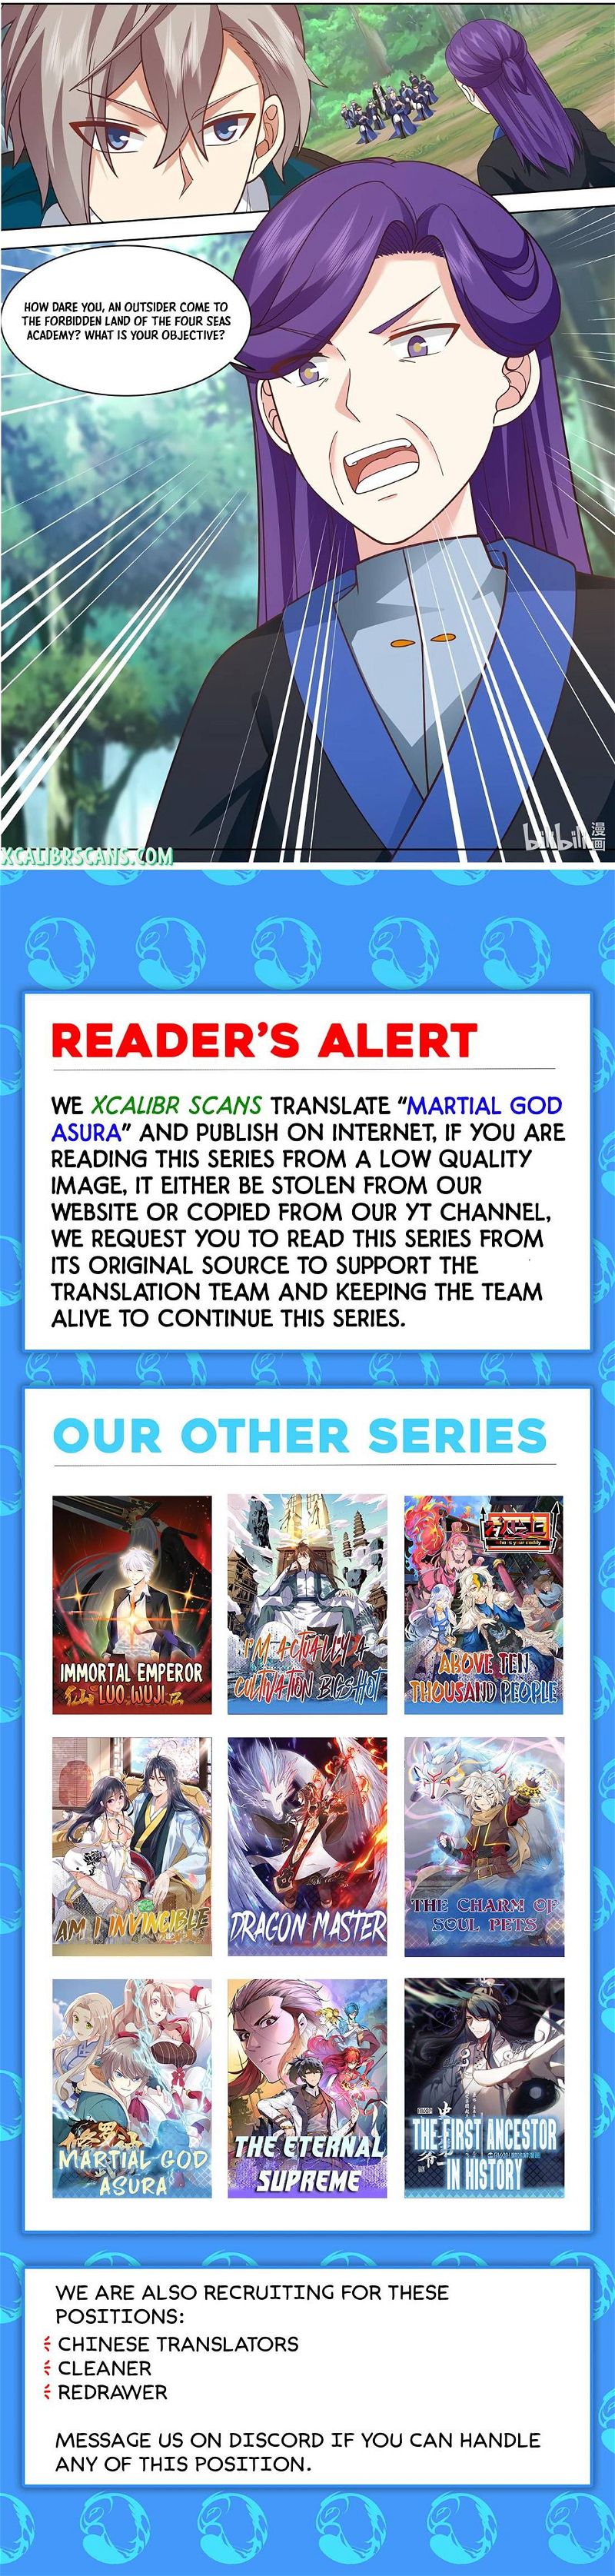 Martial God Asura Chapter 493 page 10